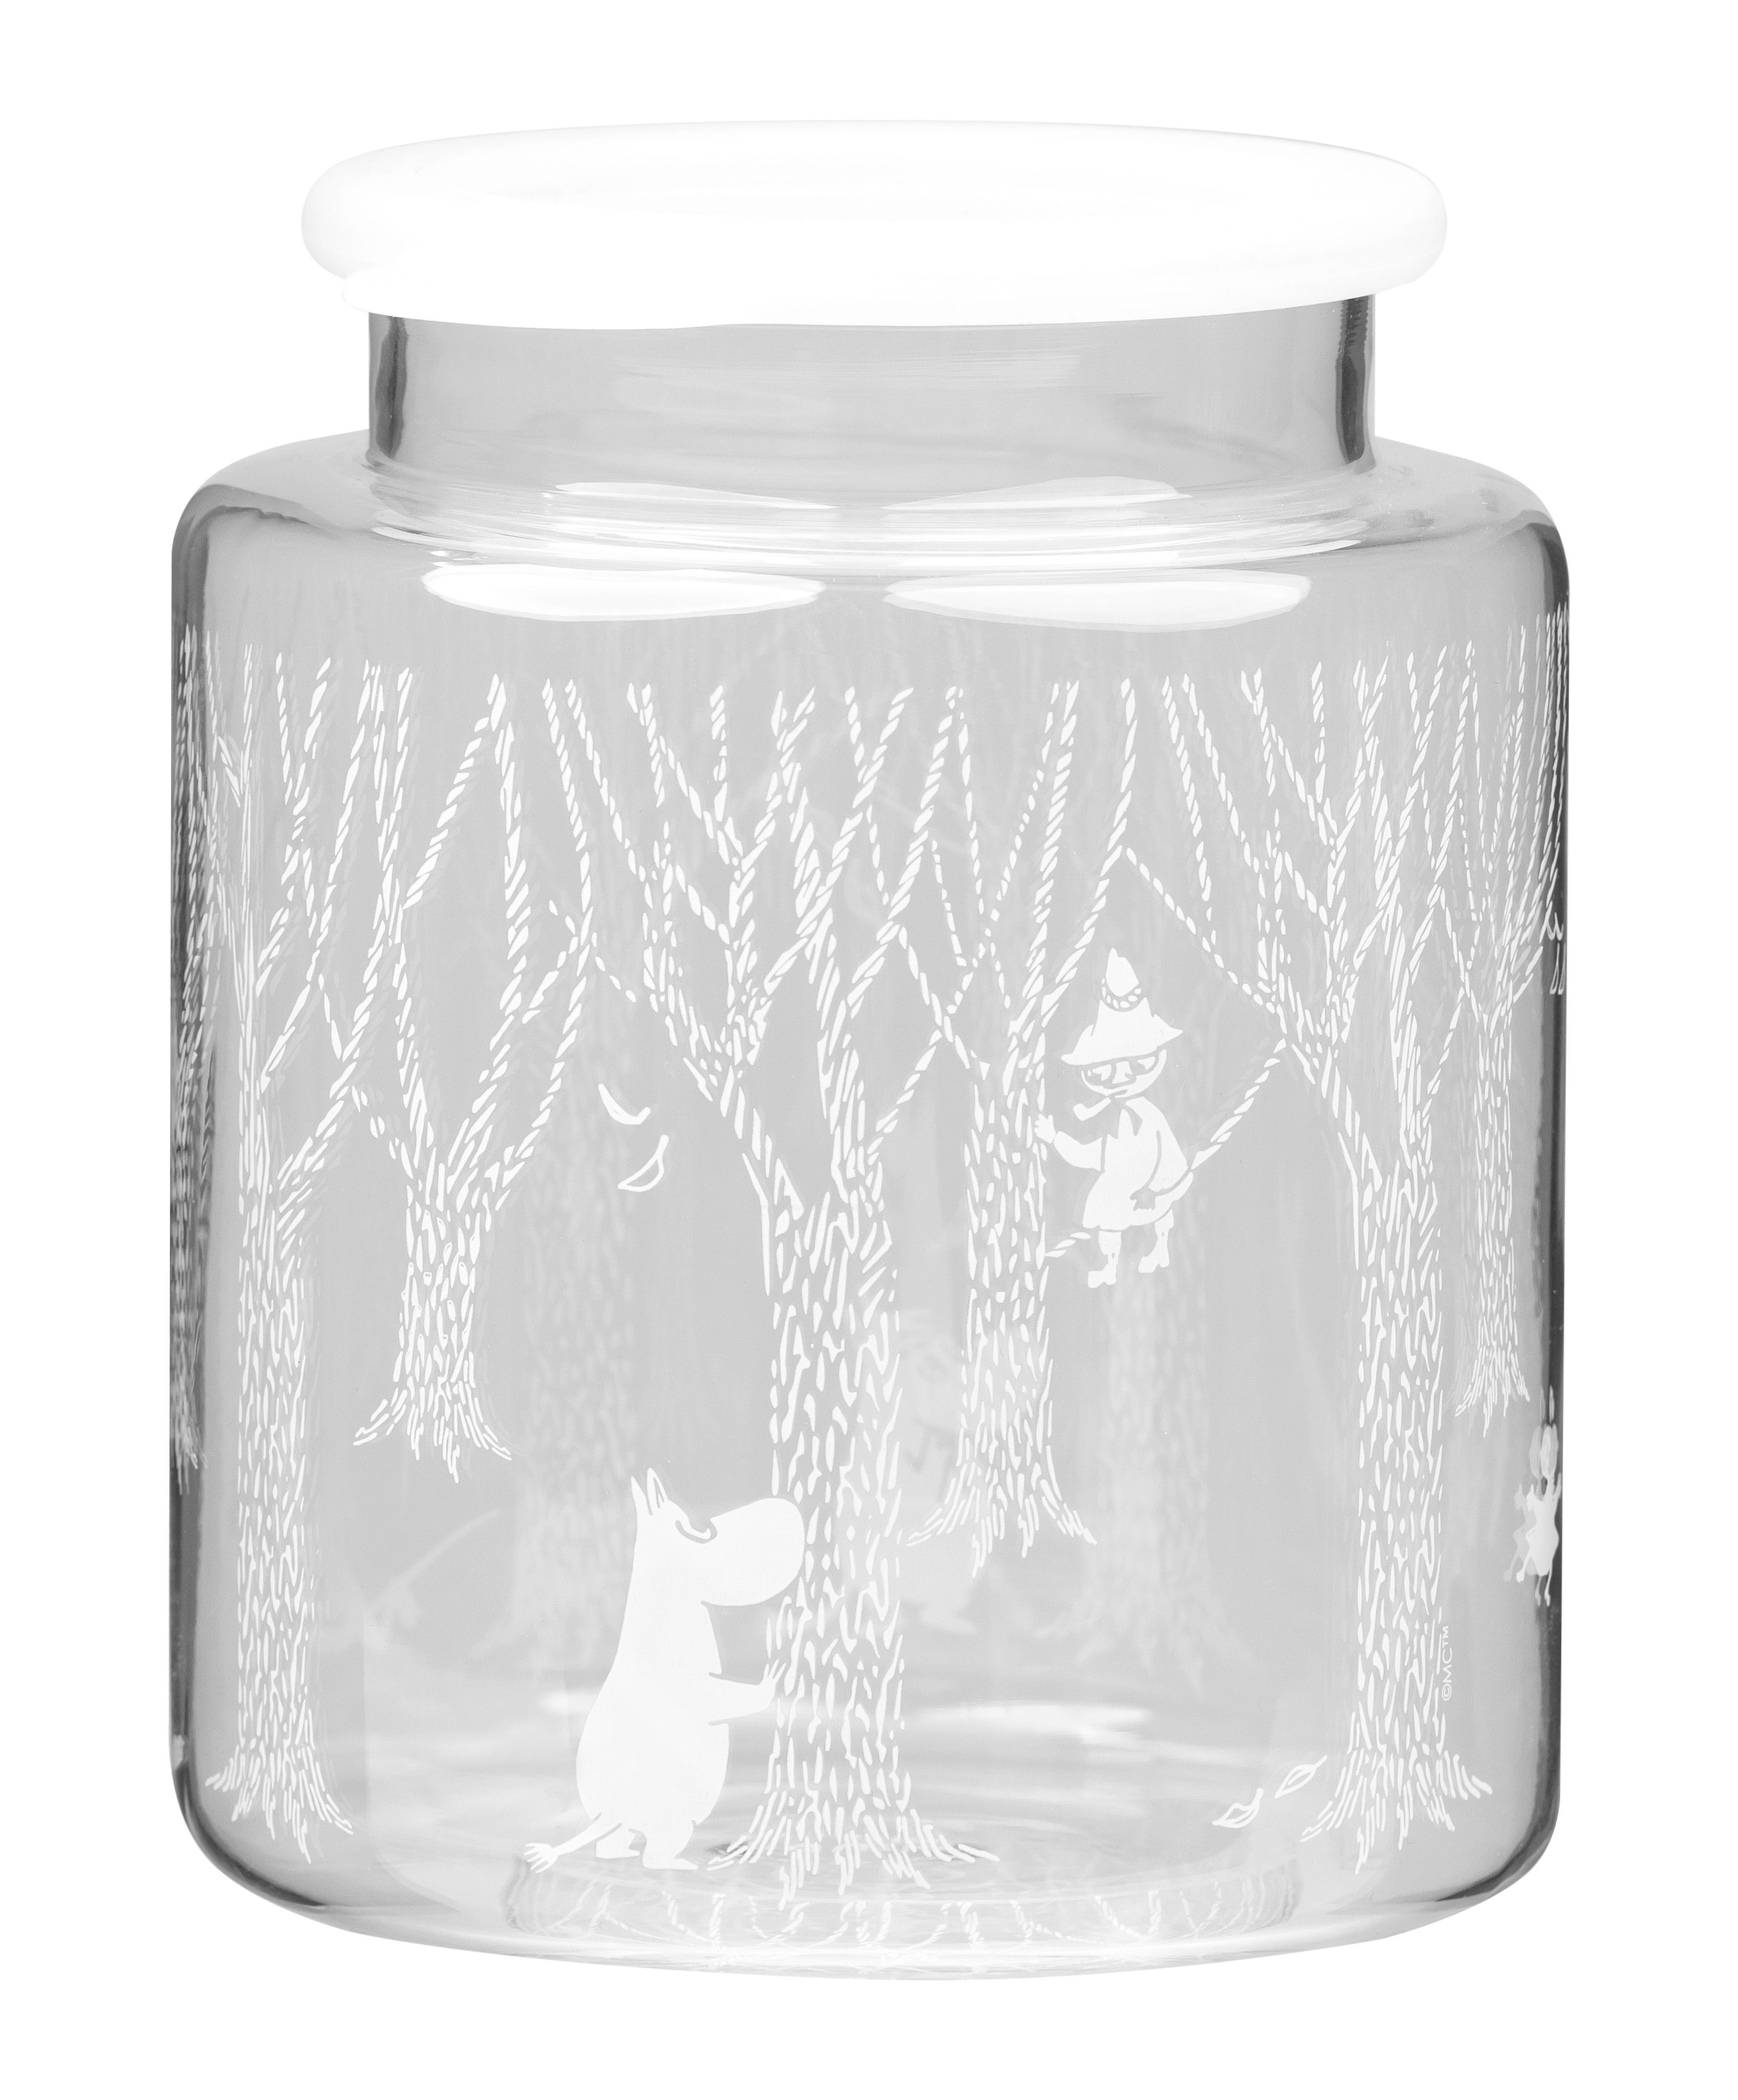 Moomin by Muurla - In the Woods glass jar 2 L